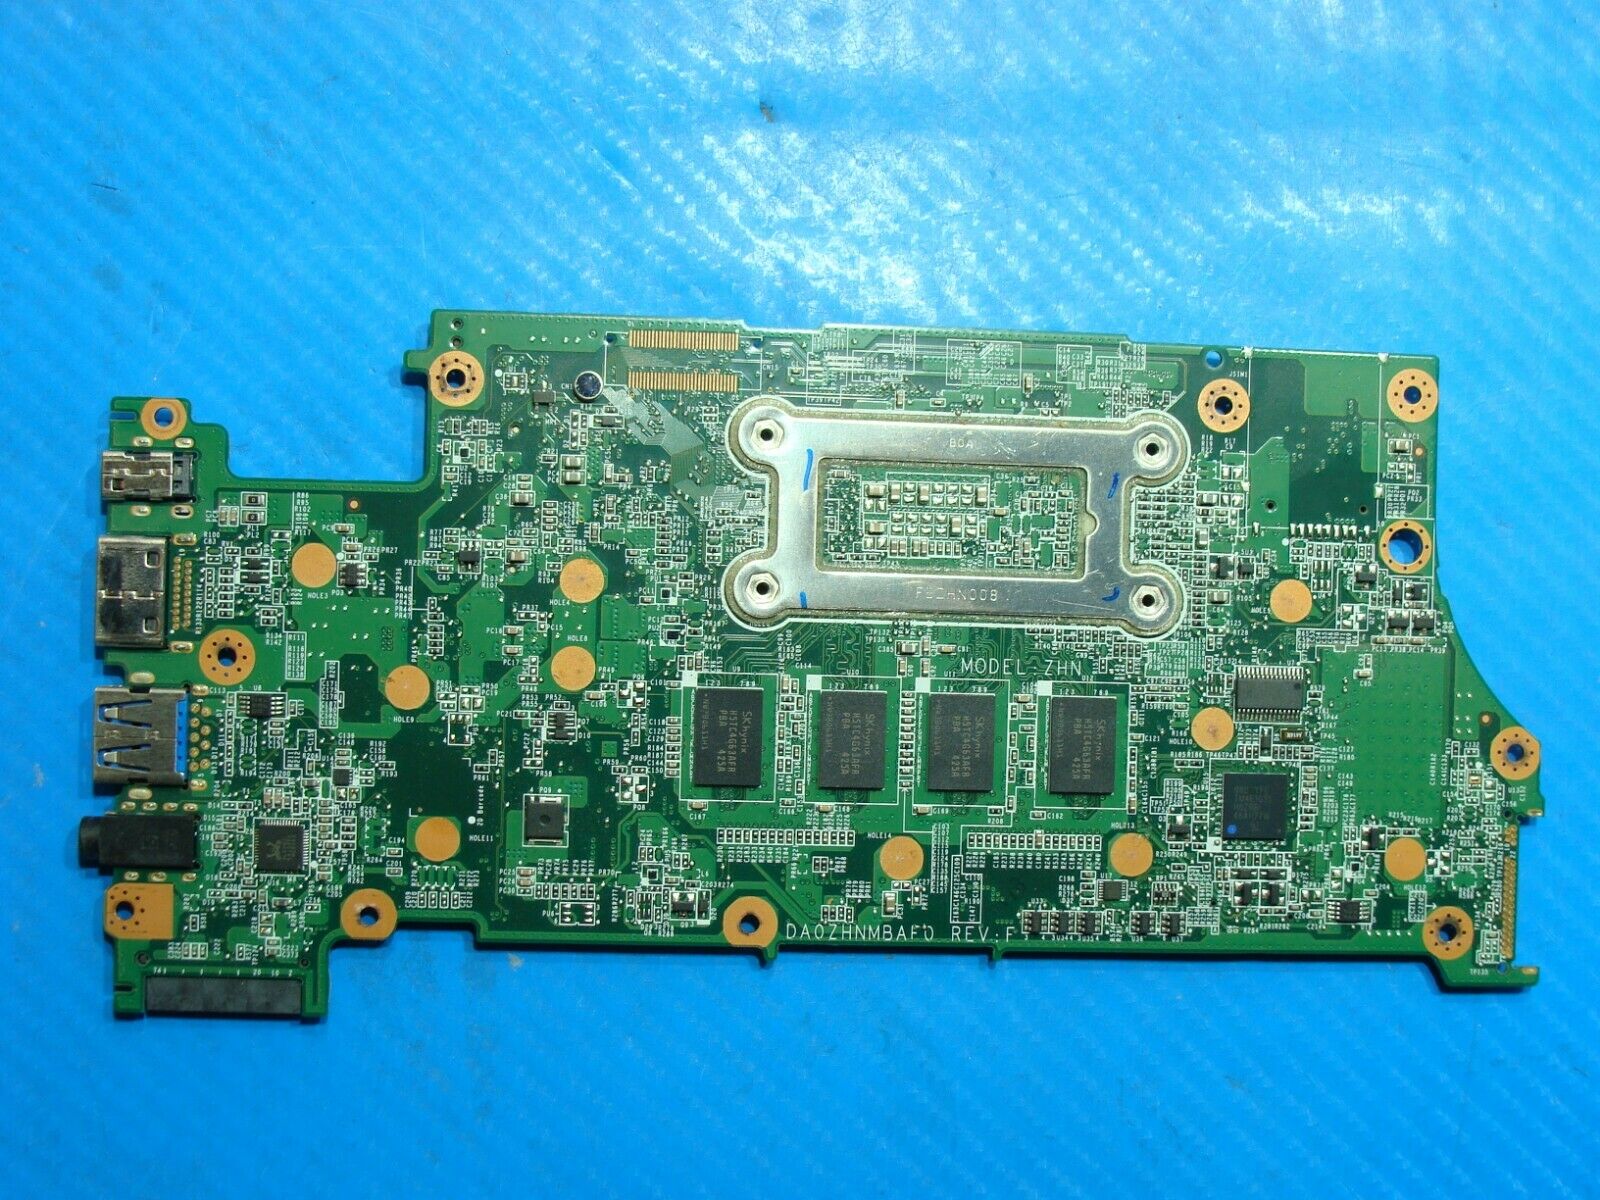 Acer Chromebook C720-2844 11.6